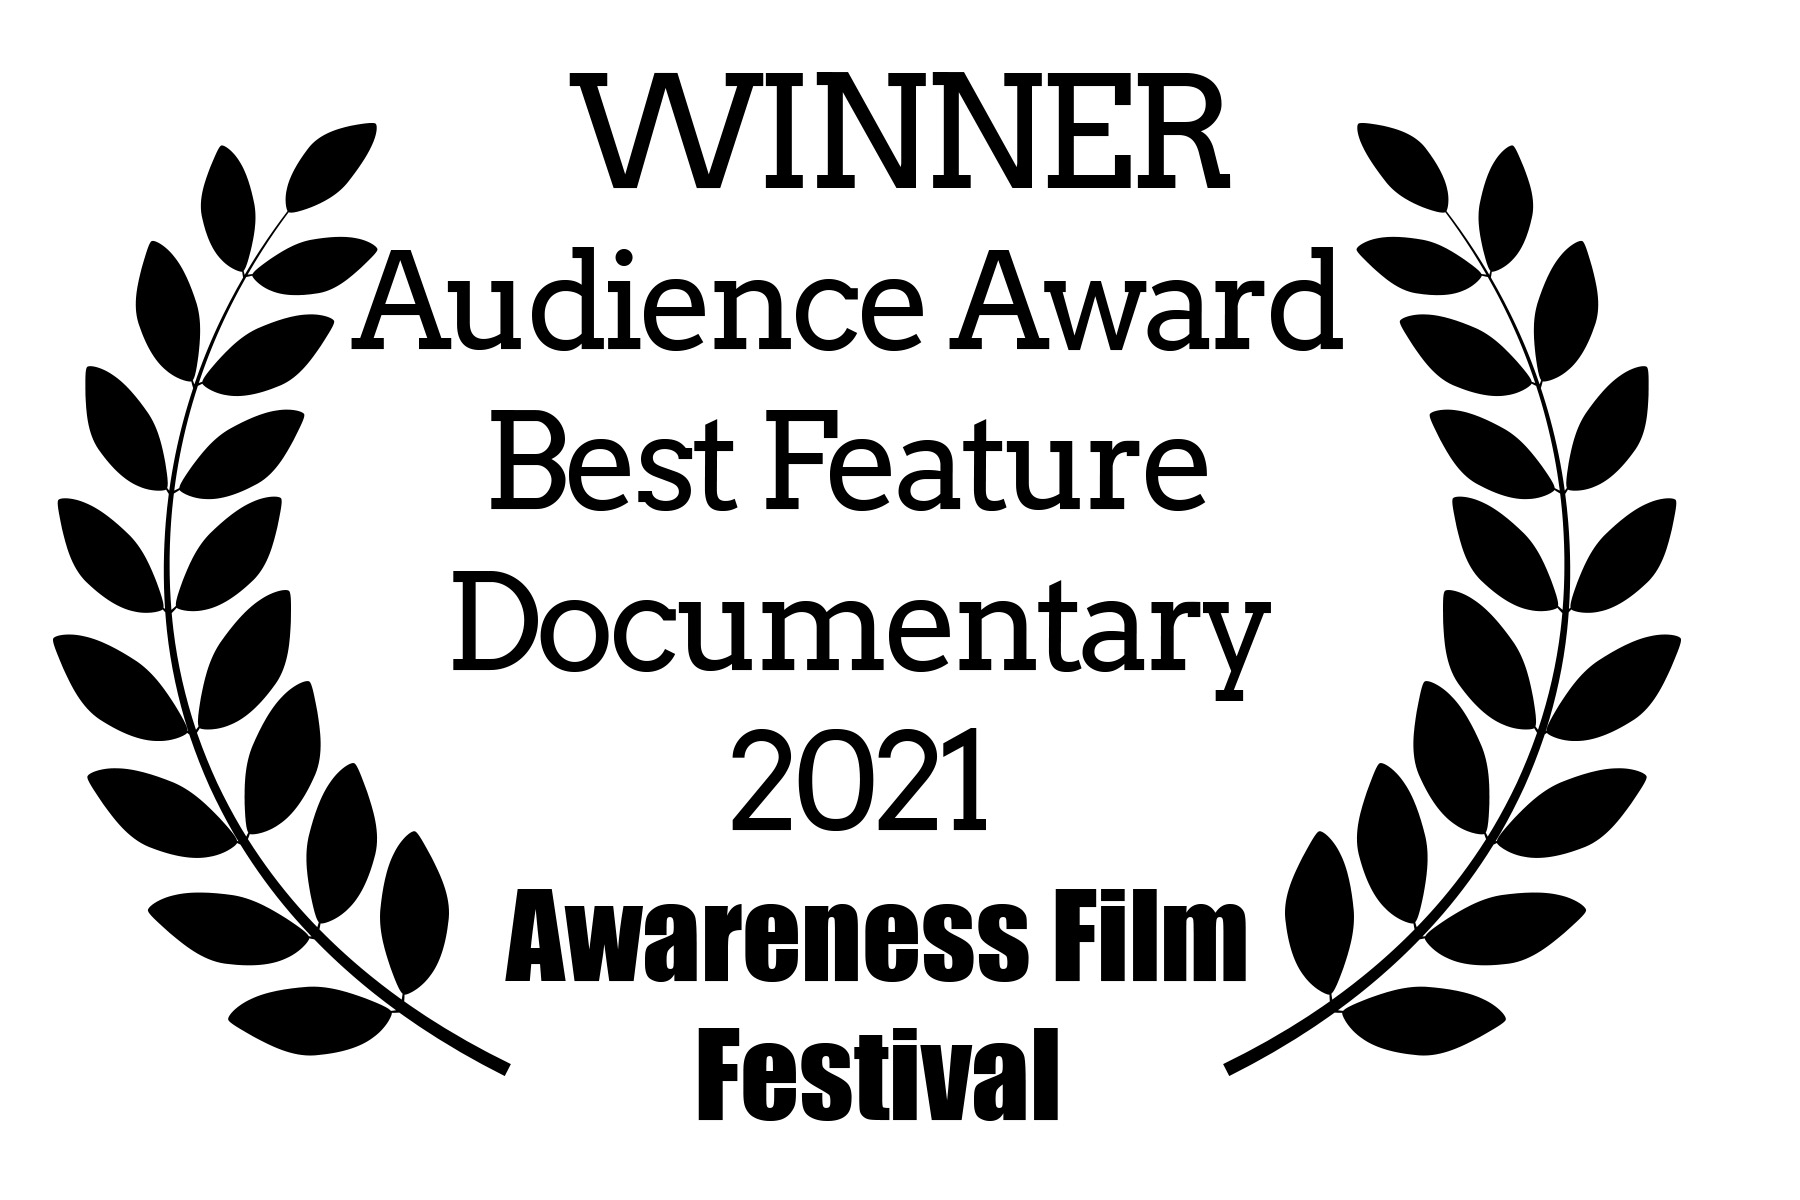 Awareness Film Festival Audience Award for Feature Documentary Award 2021